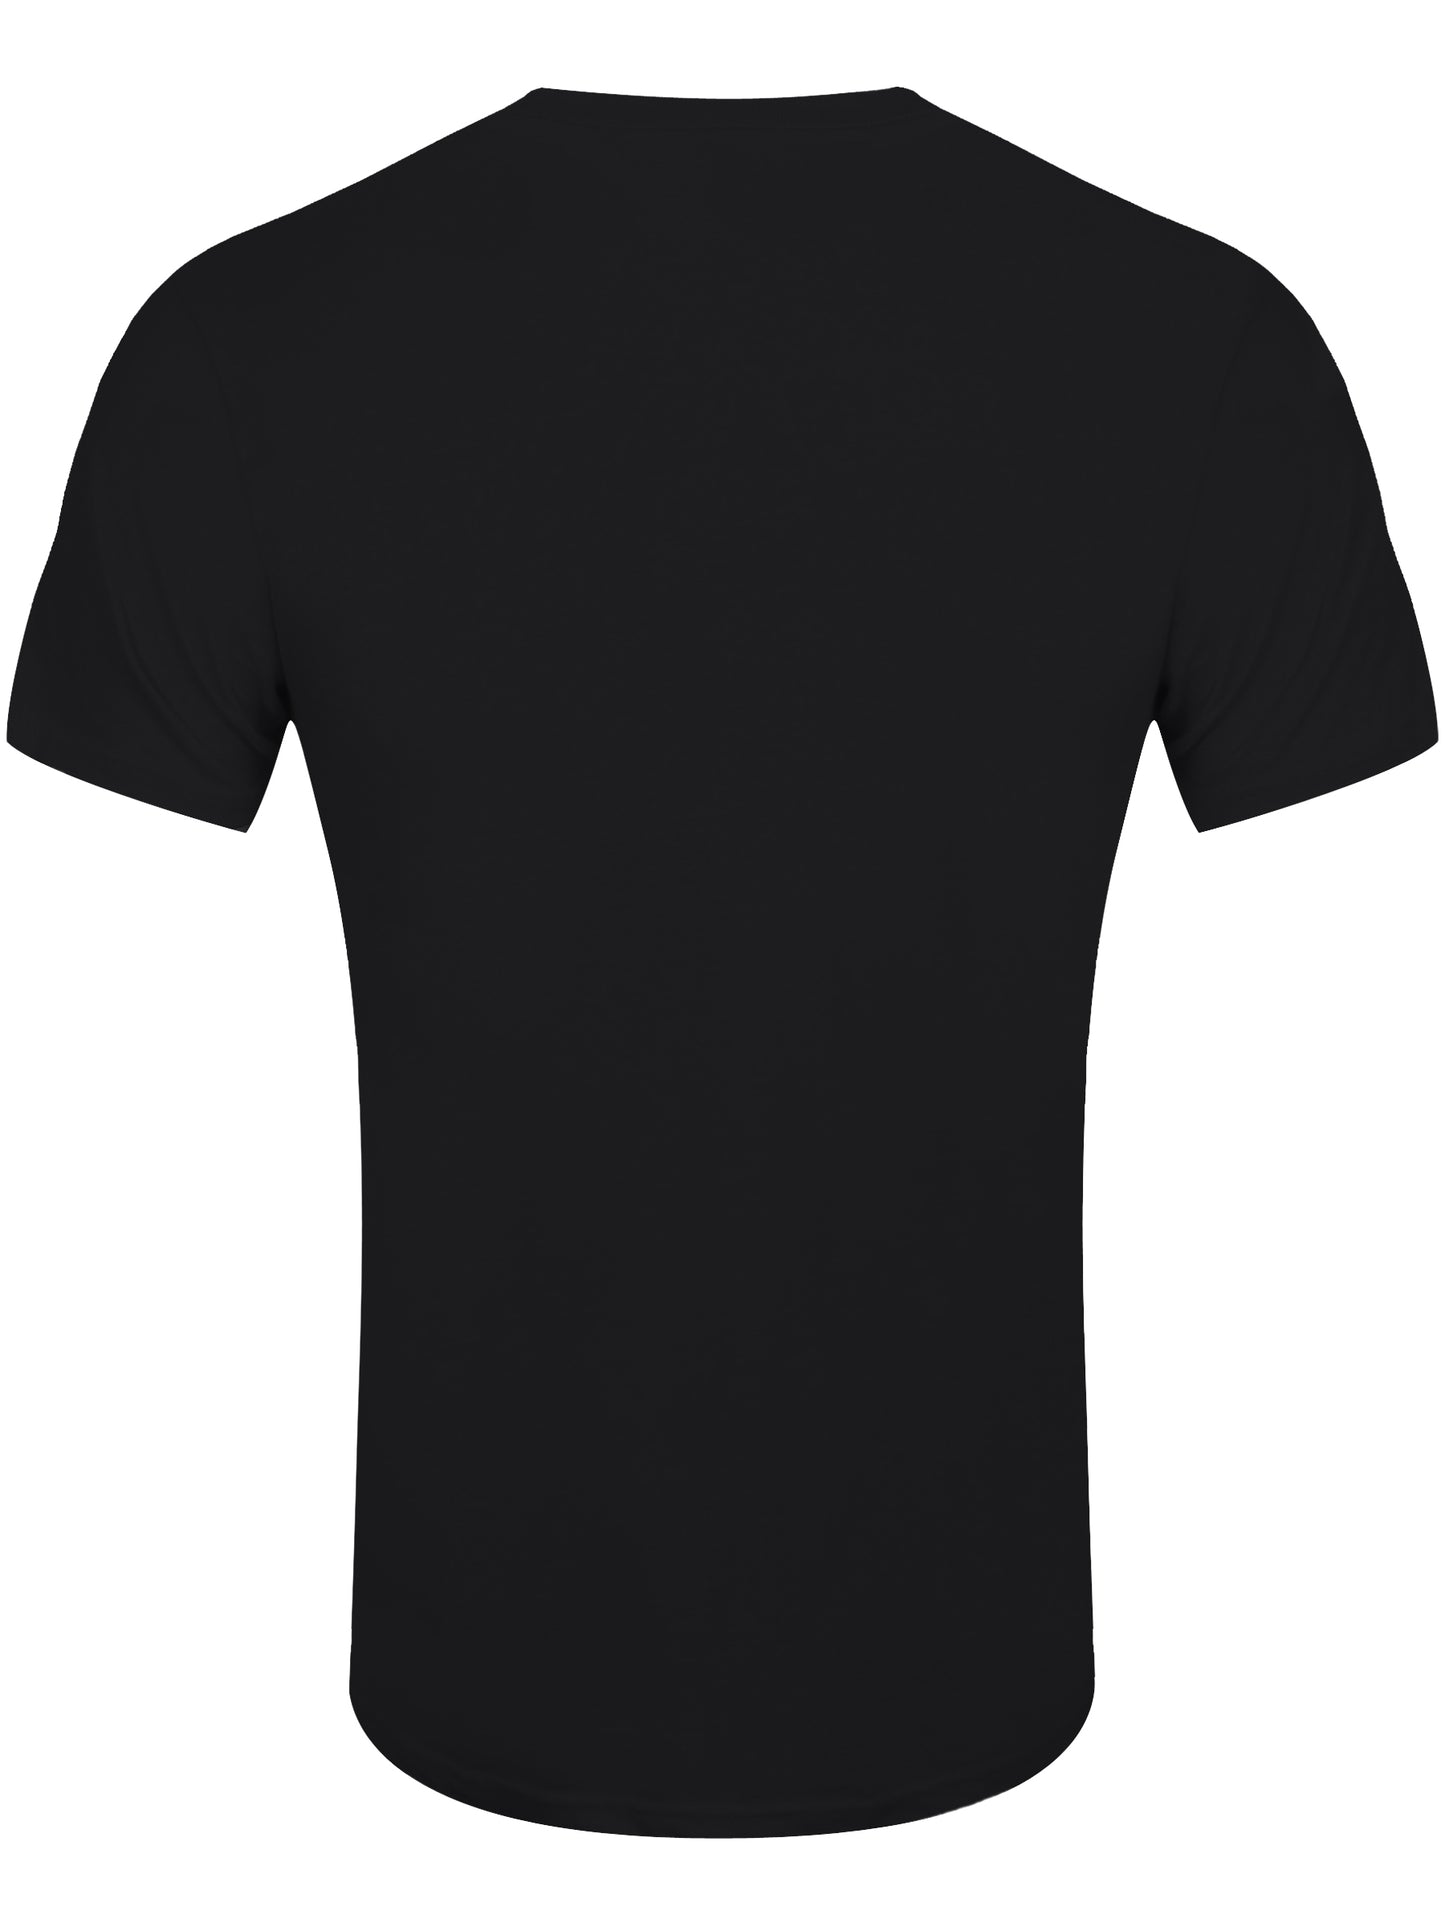 Iron Maiden Knebworth Moonbuggy Men's Black T-Shirt